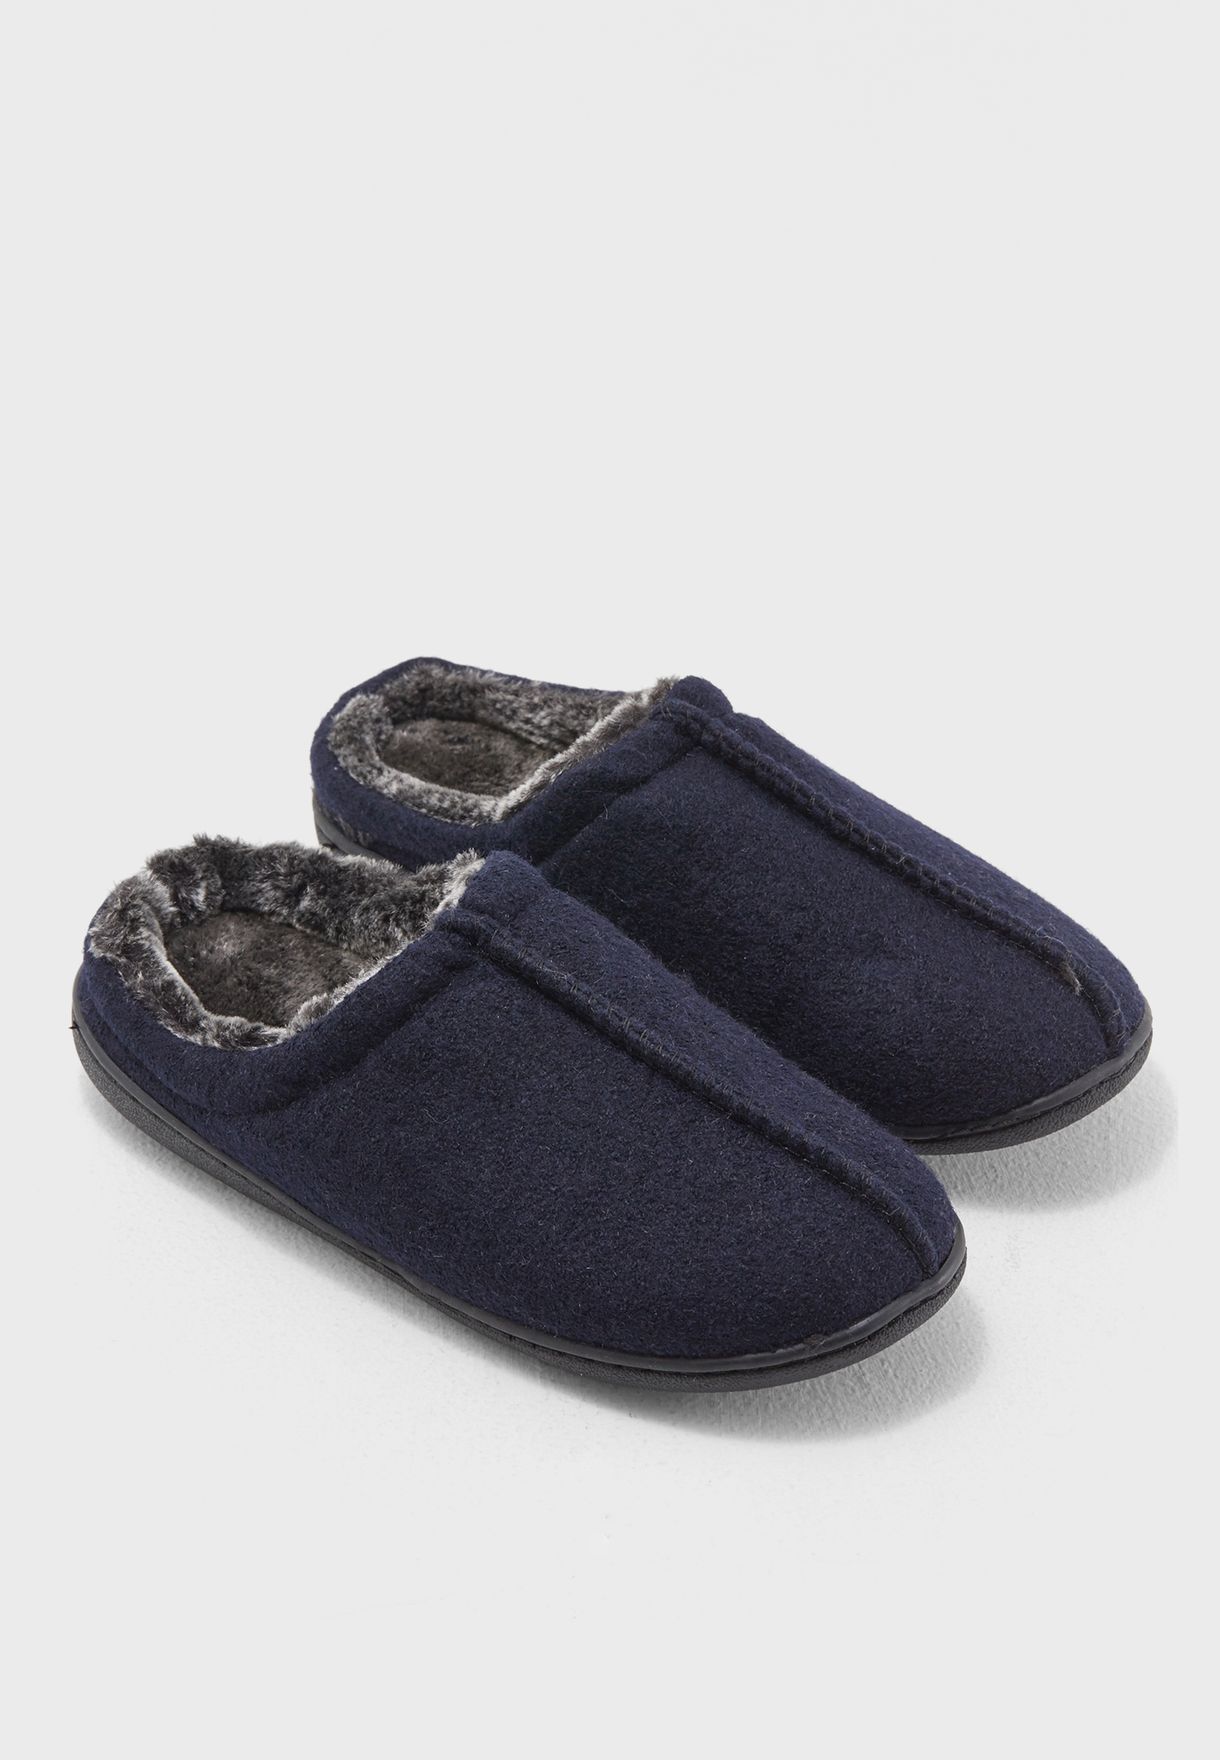 burtons slippers